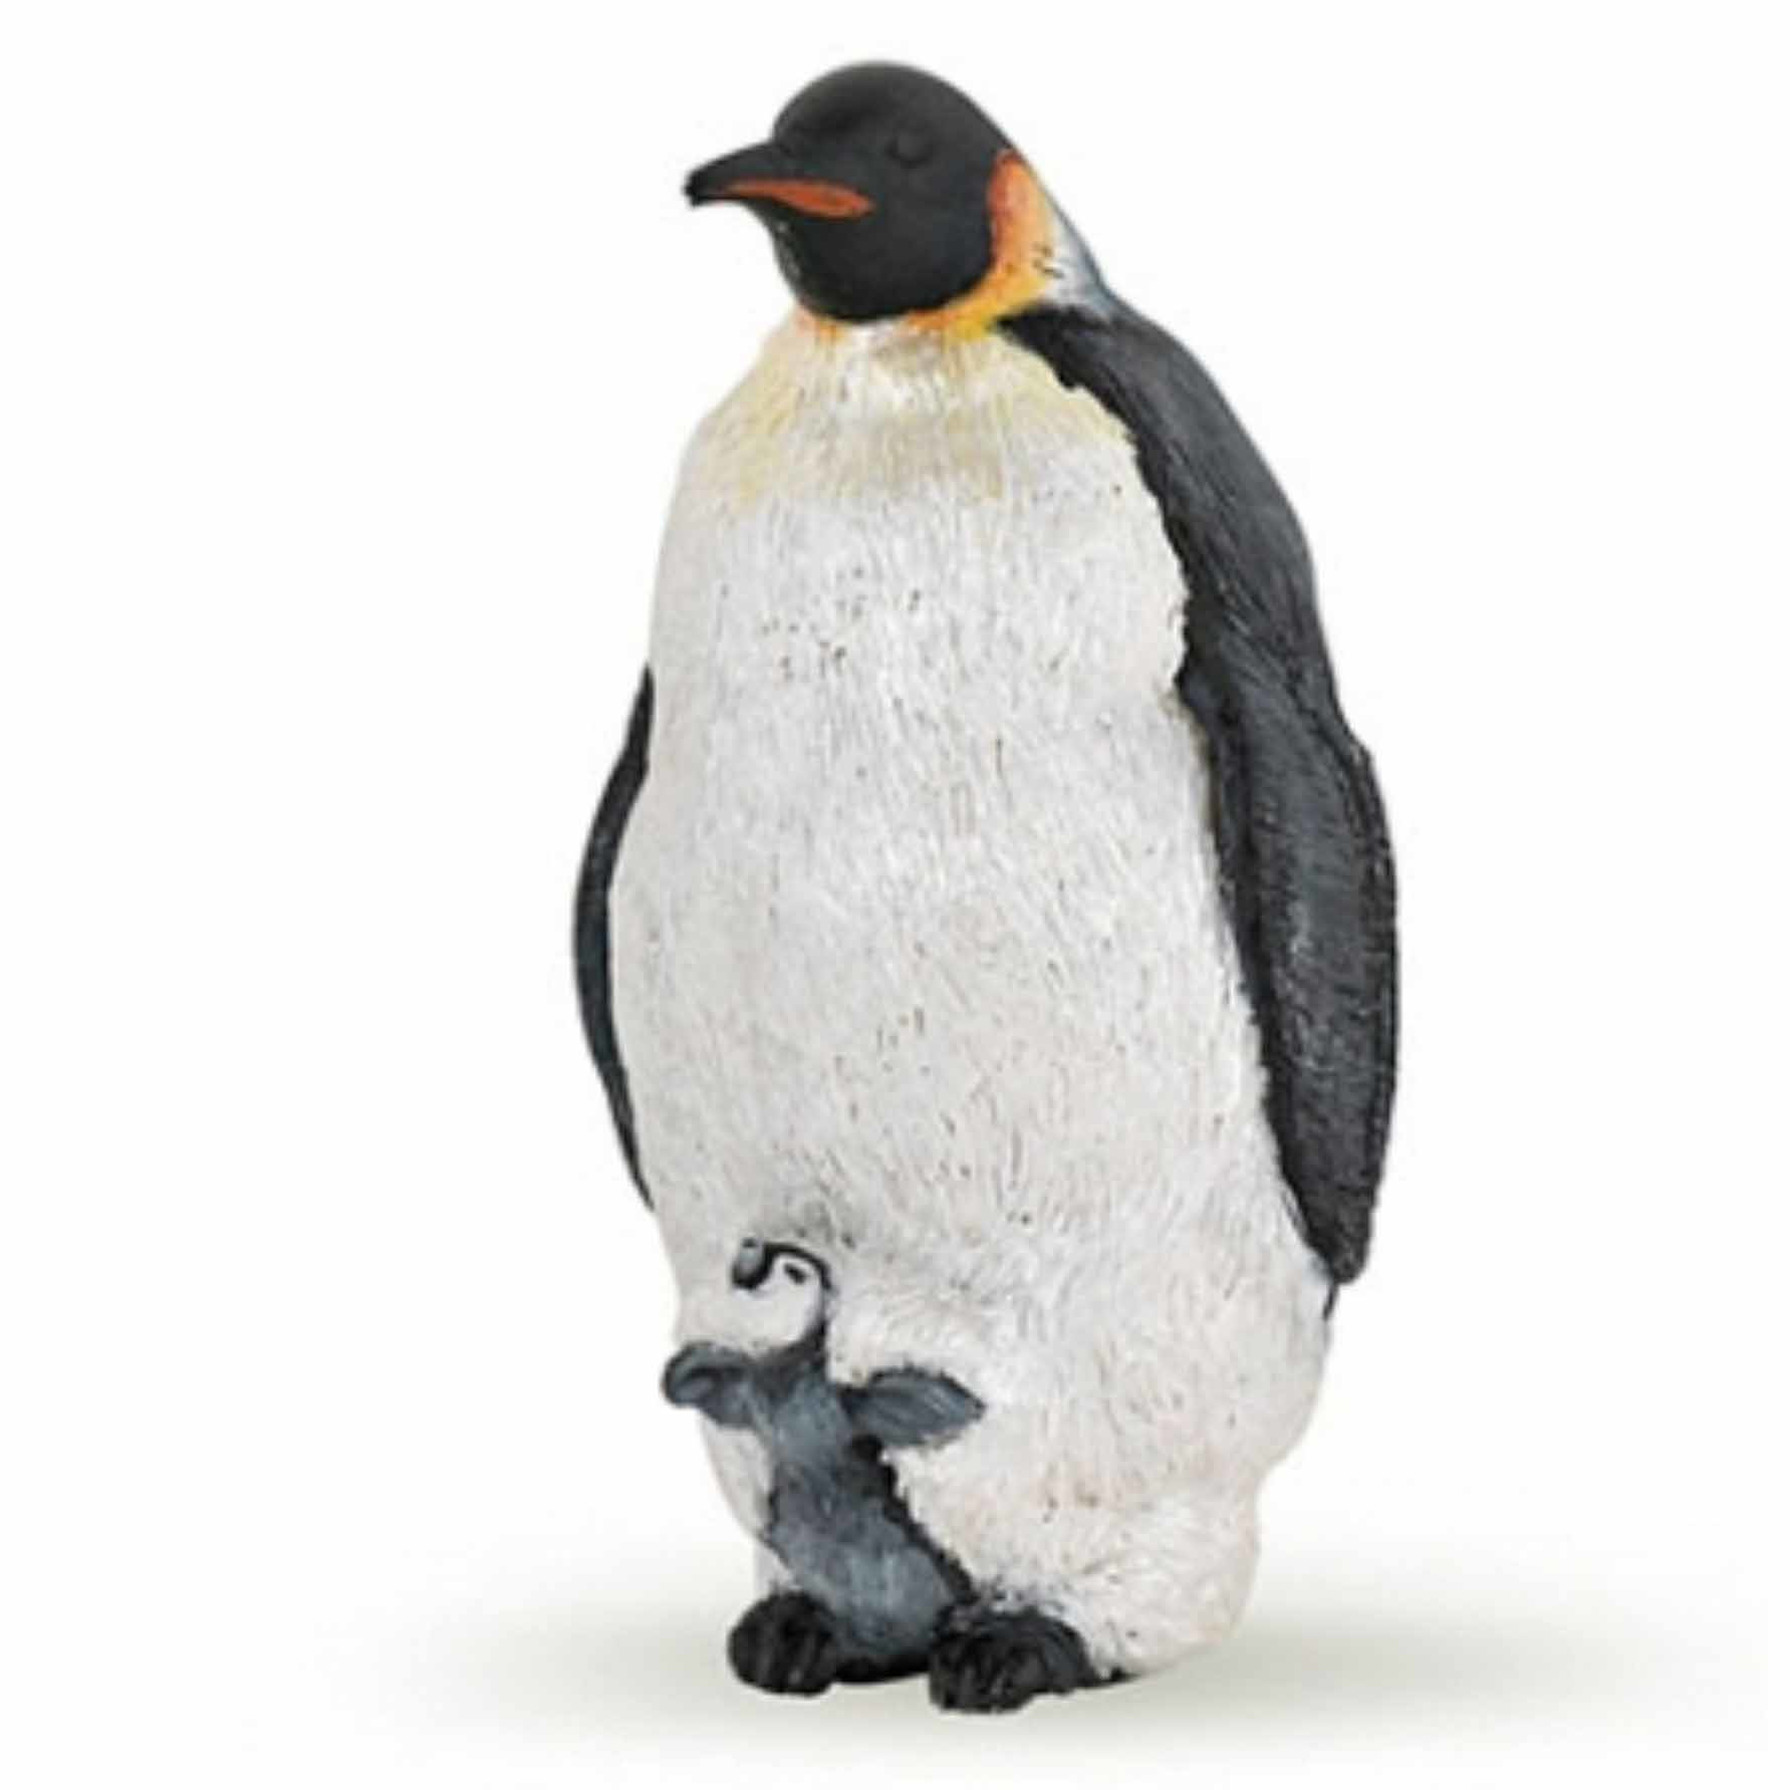 Plastic keizer pinguin speeldiertje 4 cm